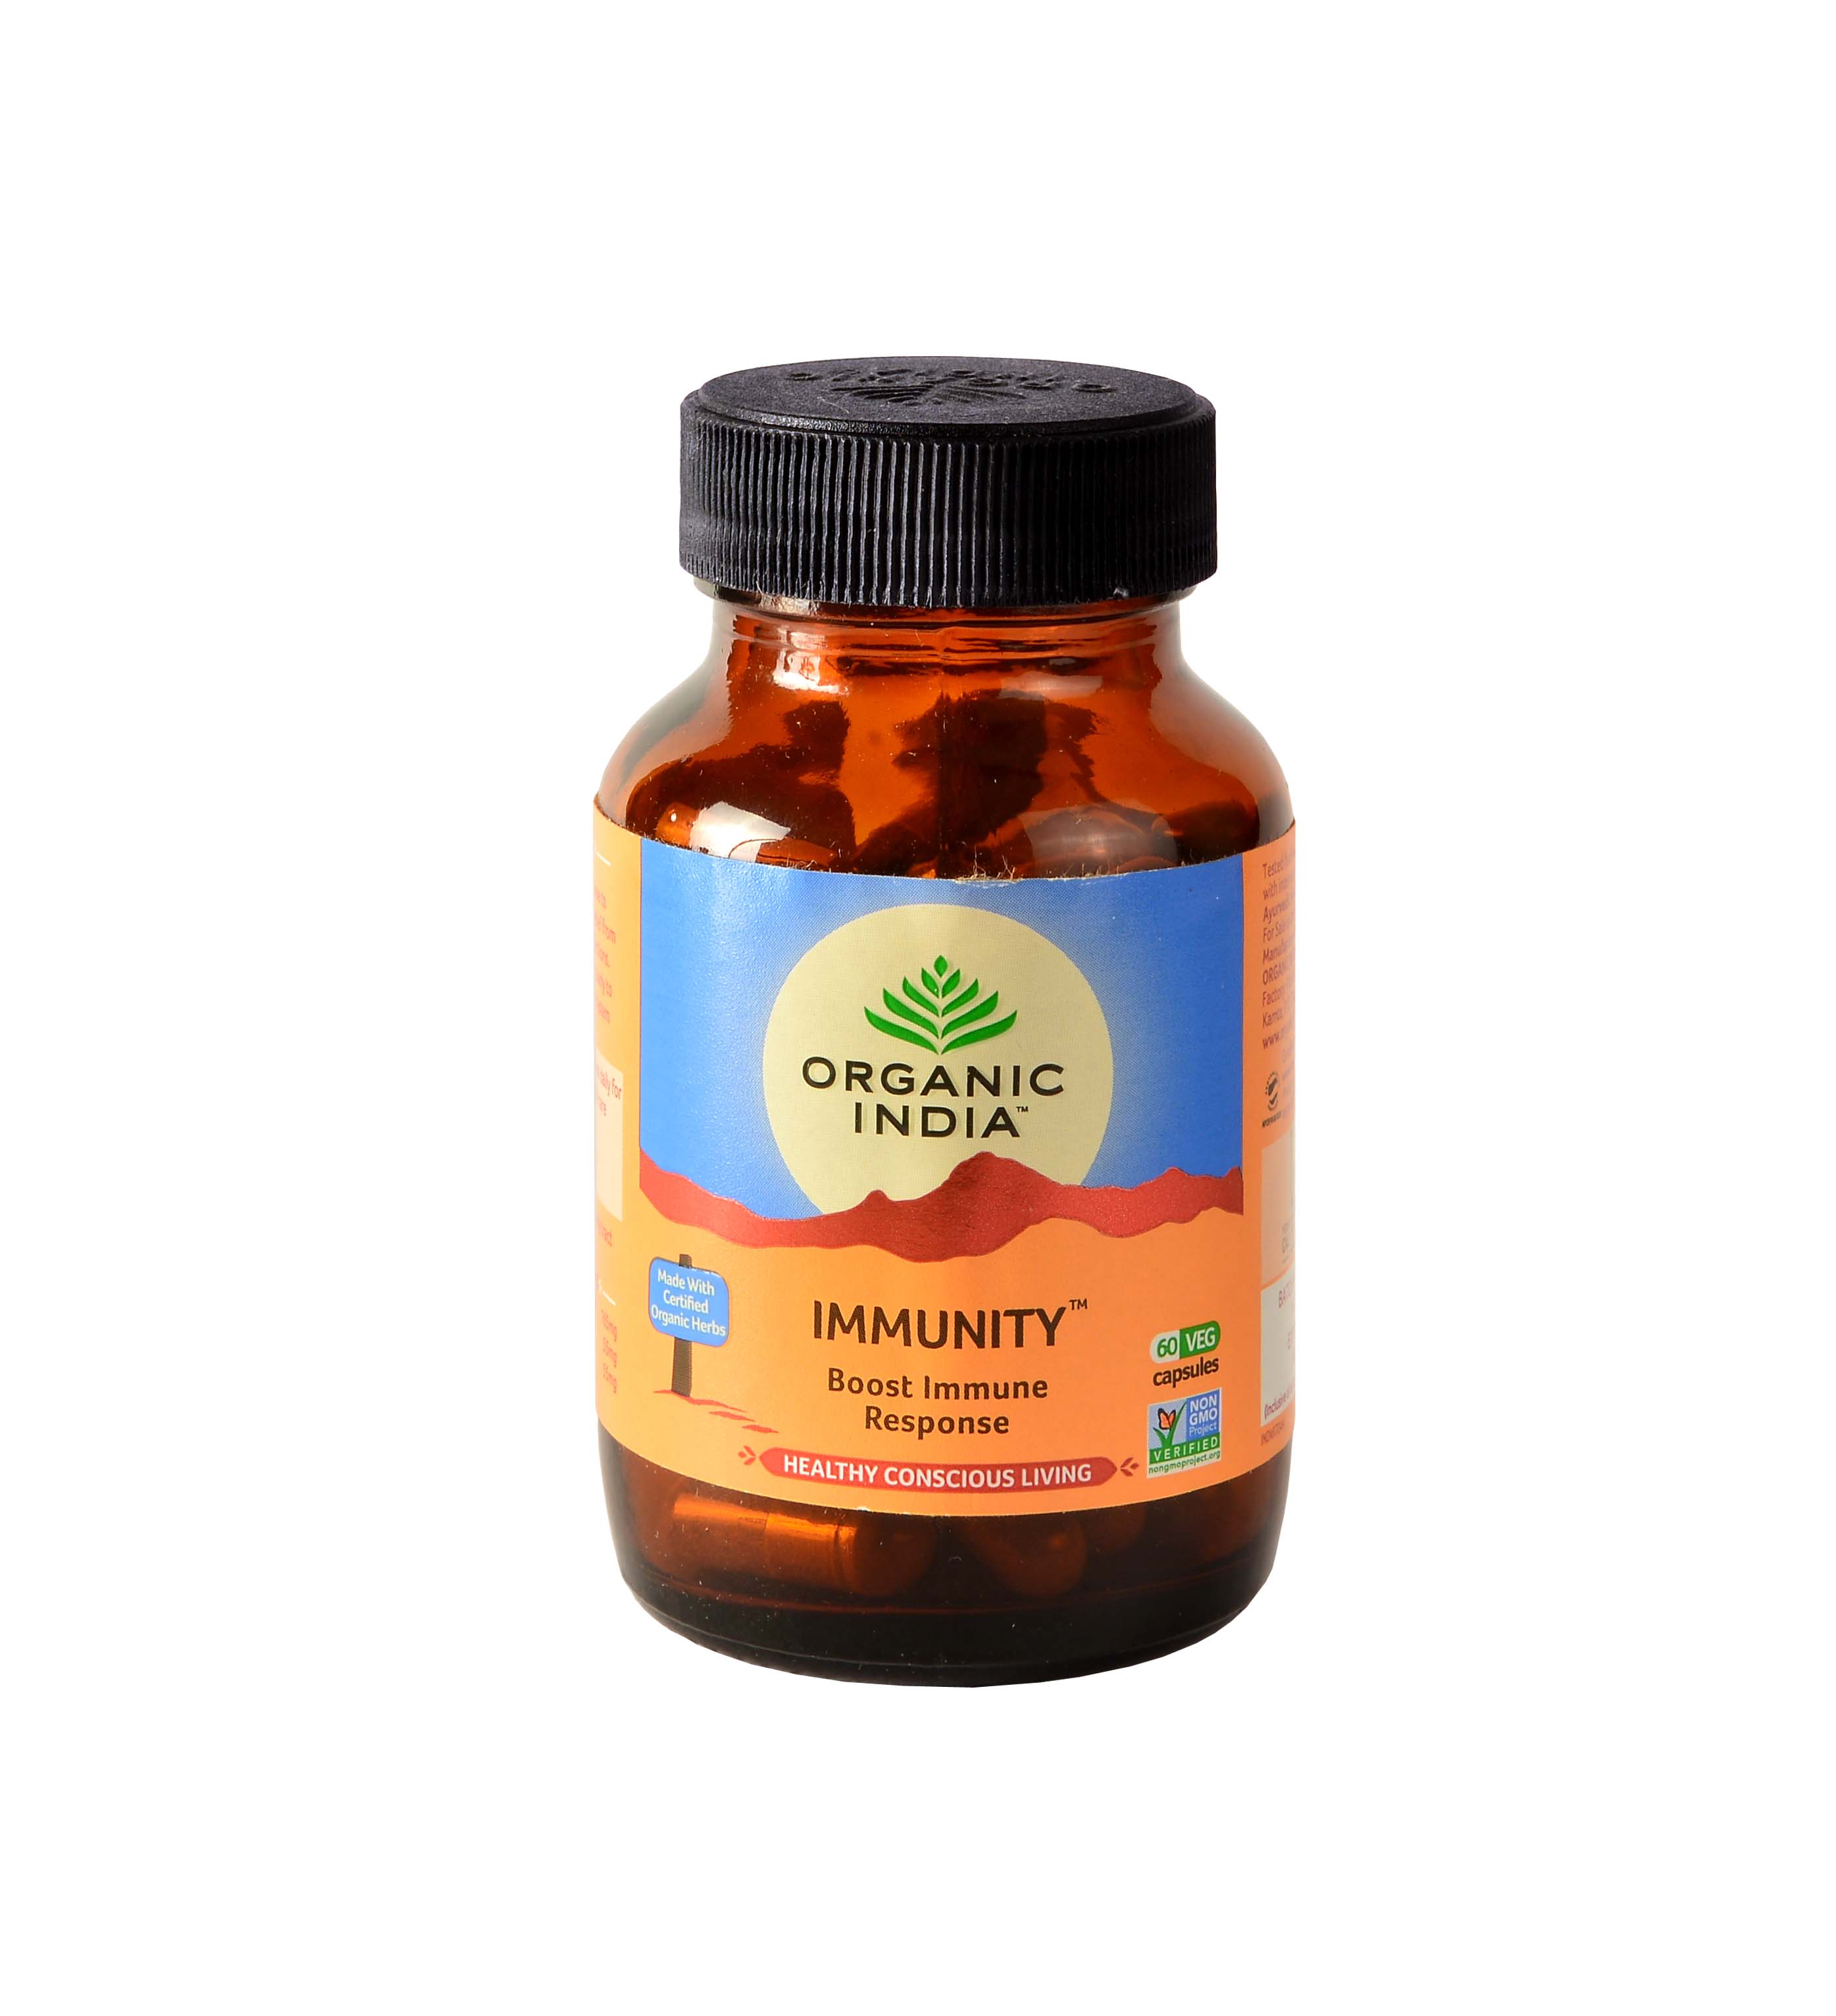 Buy Organic India Immunity Capsule at Best Price Online